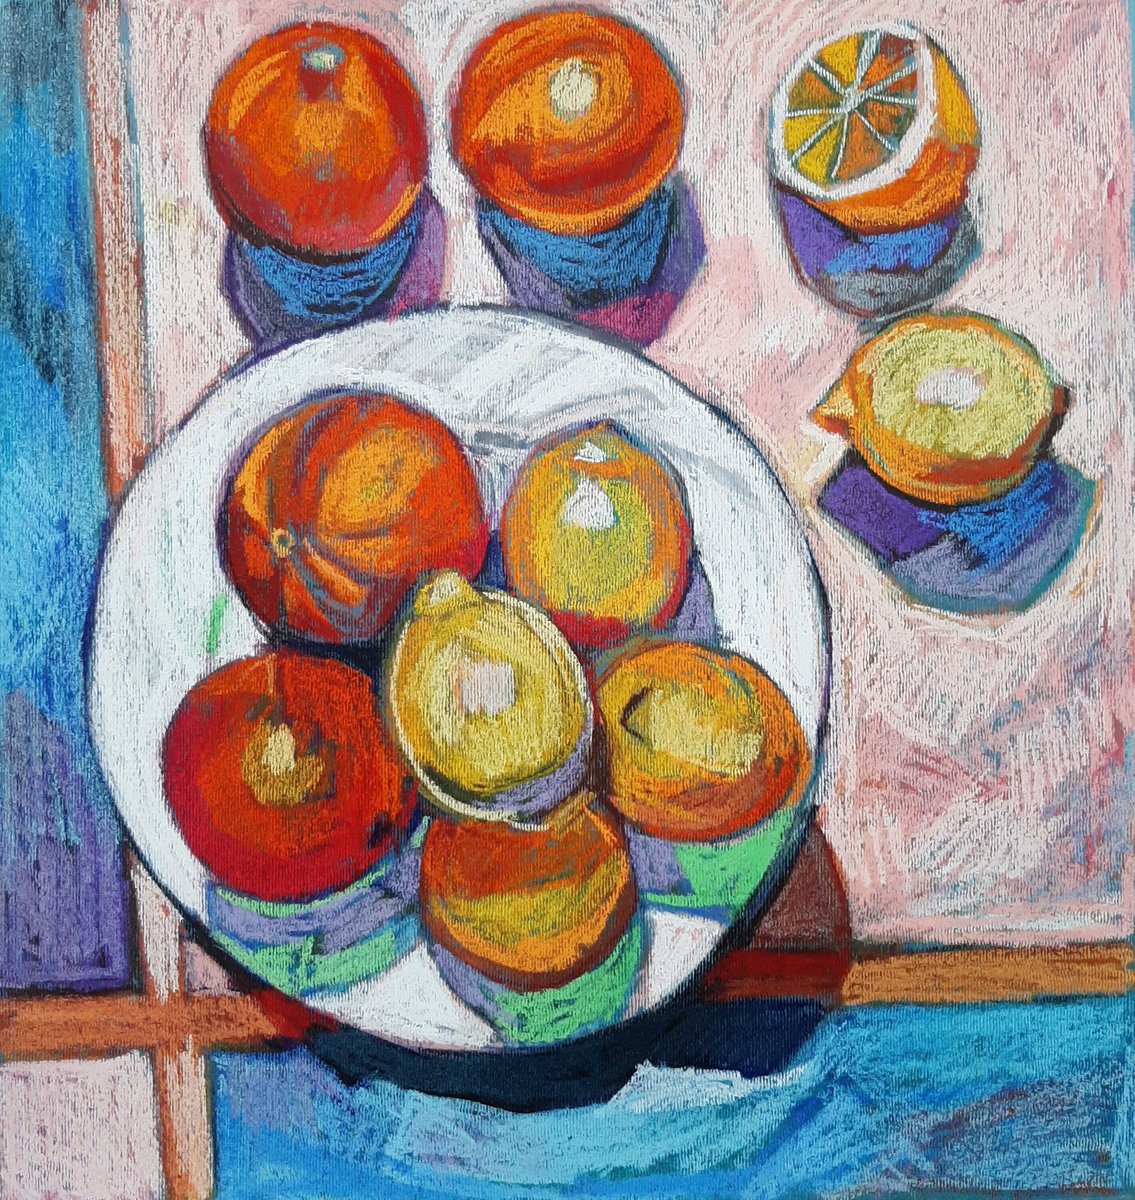 Still life with oranges and lemons, 2022 by Maja Dokic Mihajlovic